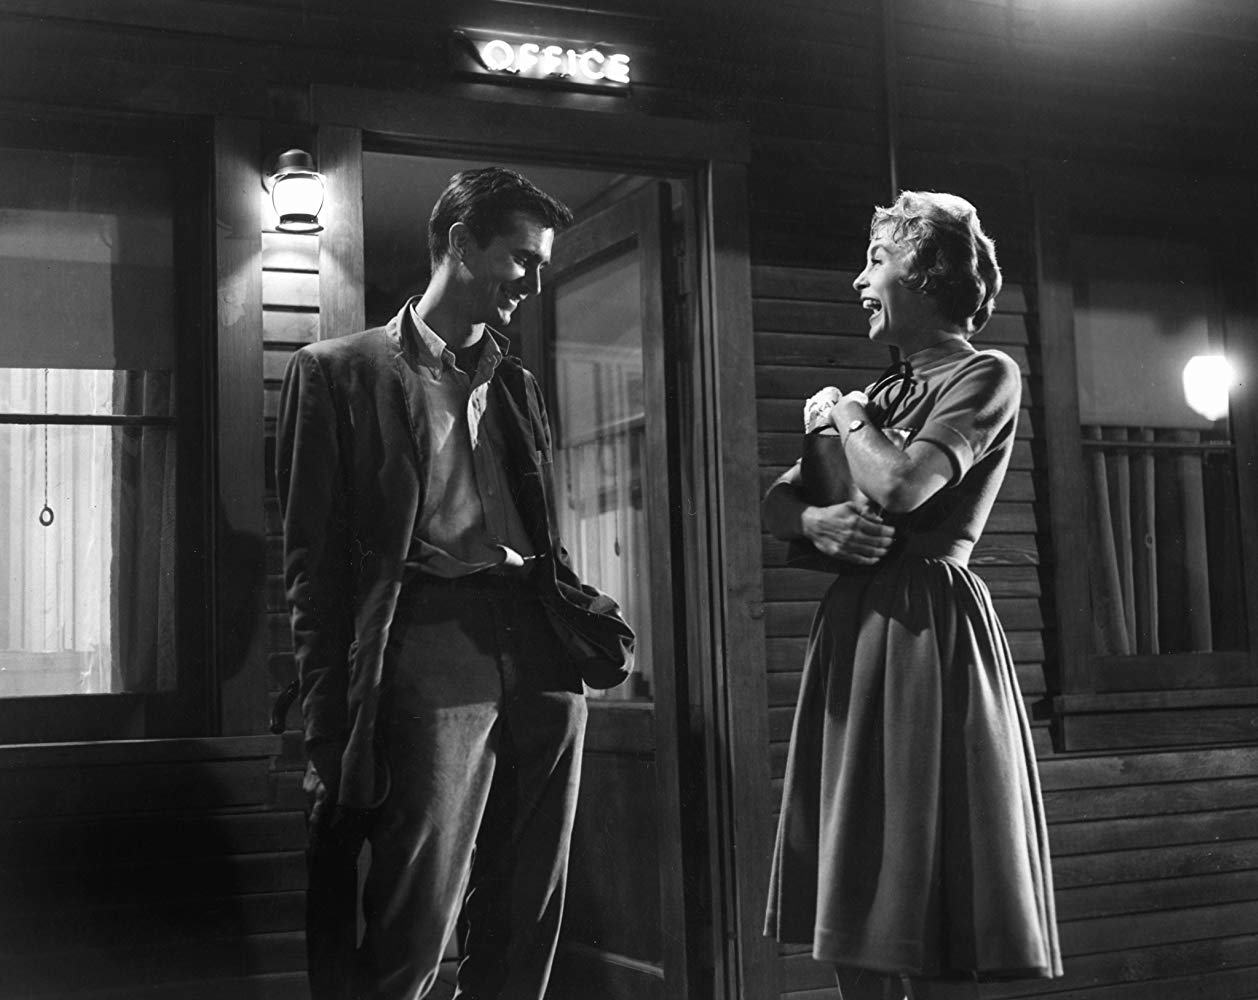 Psycho 1960 - 10 فیلم برتر و شاهکار آلفرد هیچکاک بر اساس امتیاز IMDb